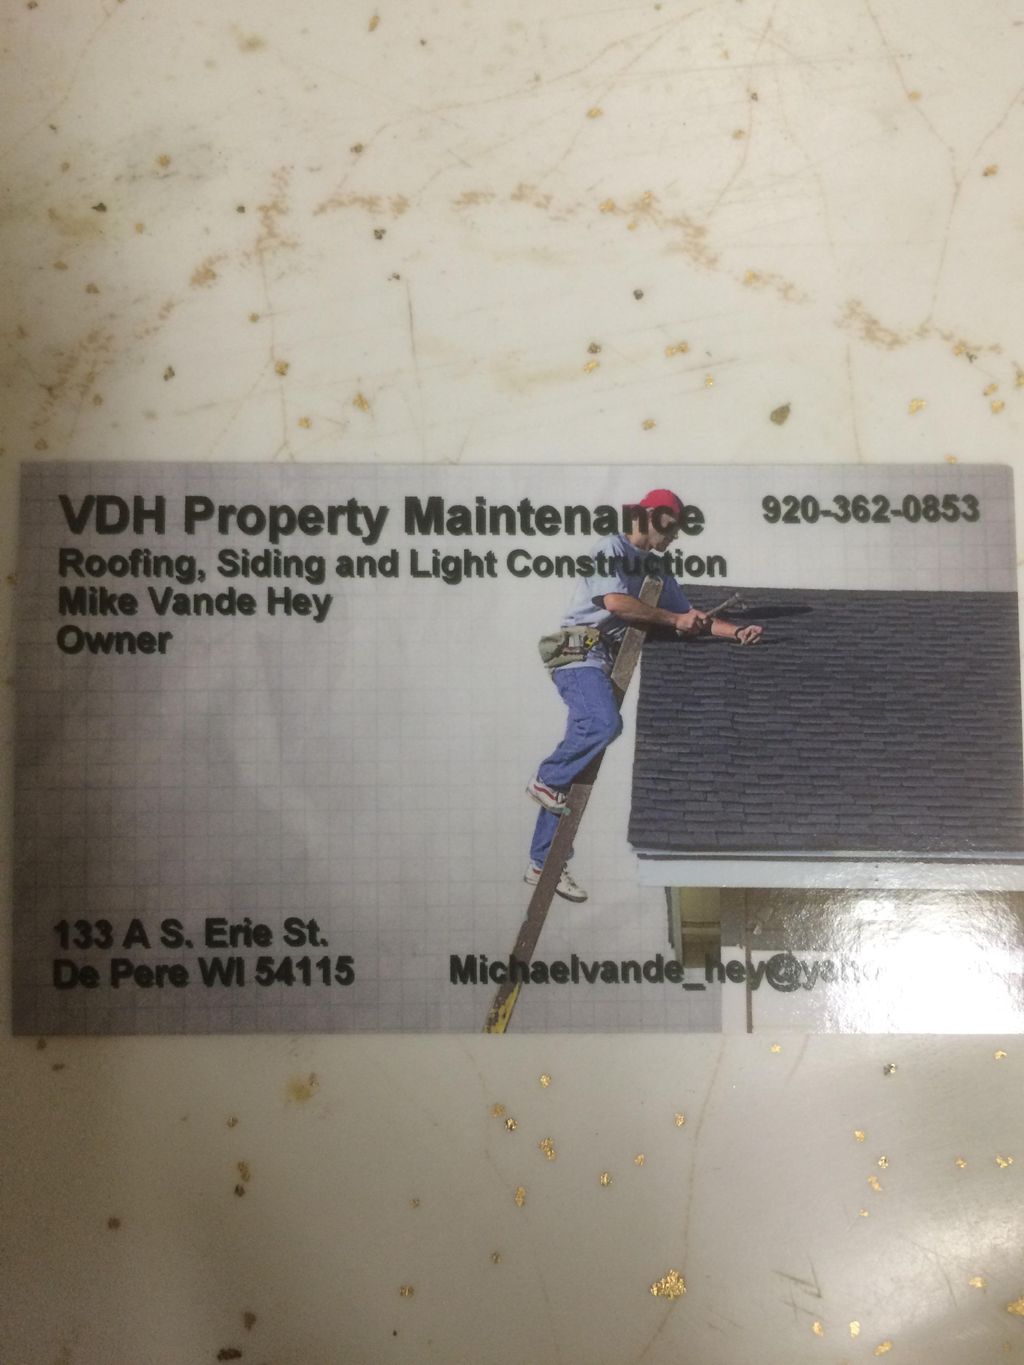 VDH Property Maintenance